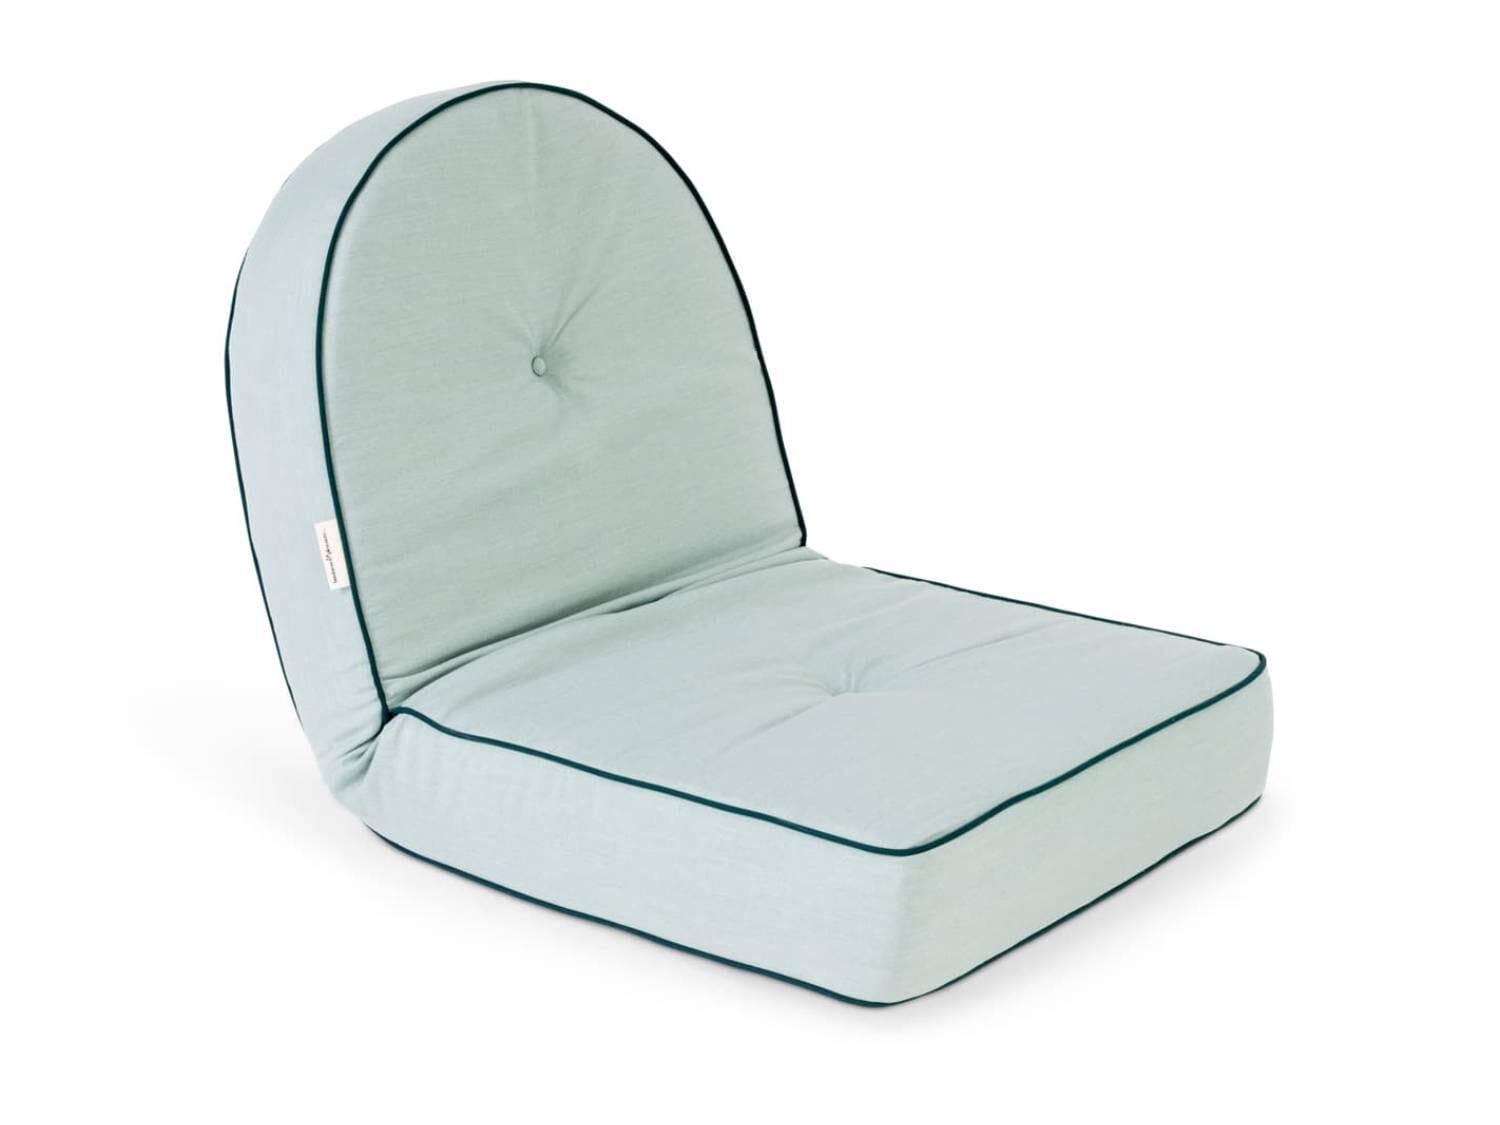 Studio image of riviera green reclining pillow stack